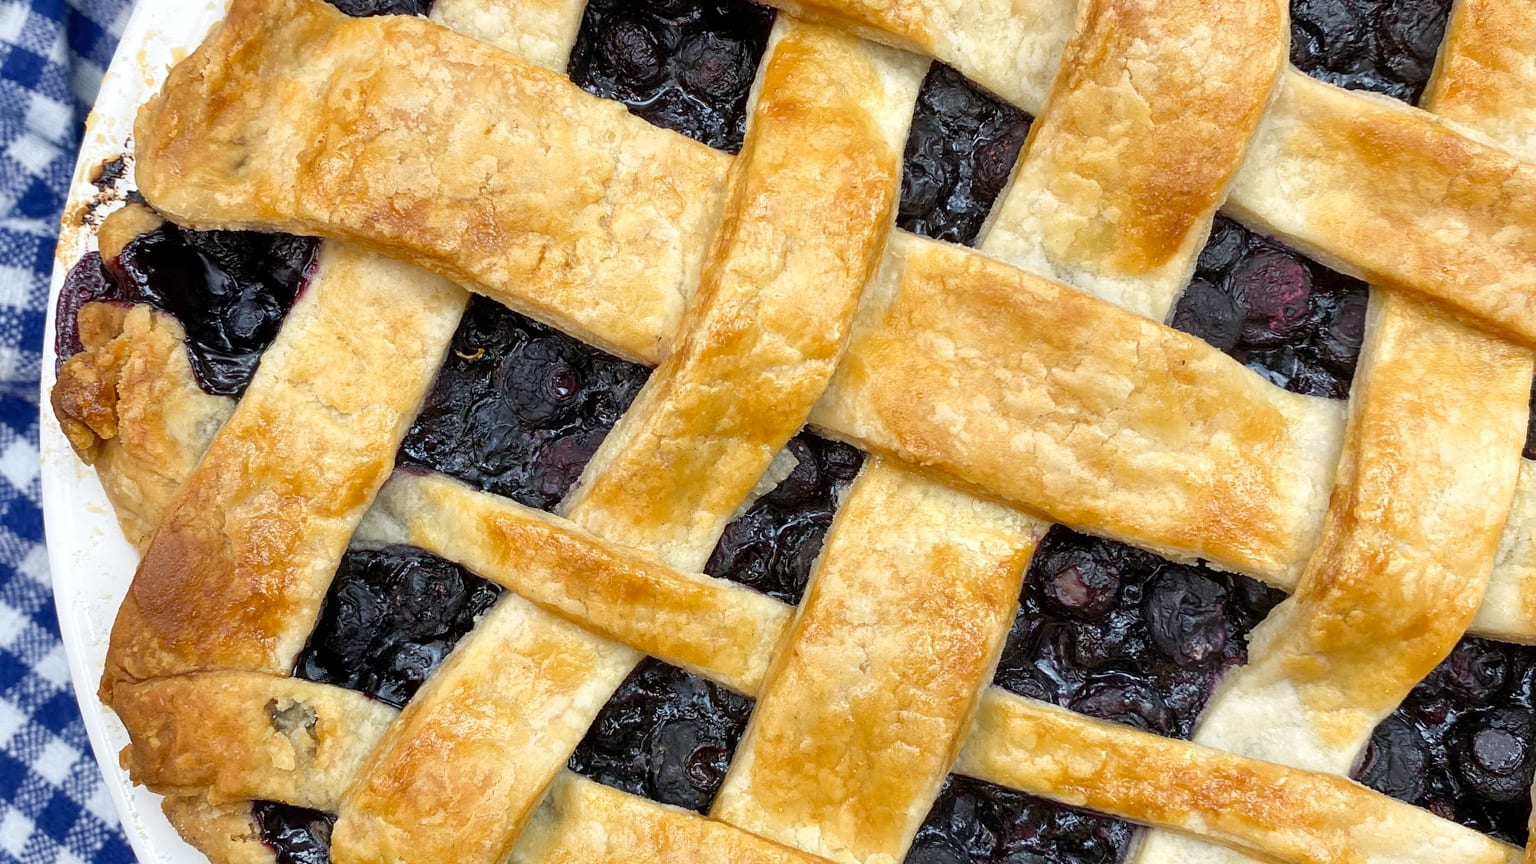 Classic Blueberry Pie with Frozen Blueberries - Always Eat Dessert